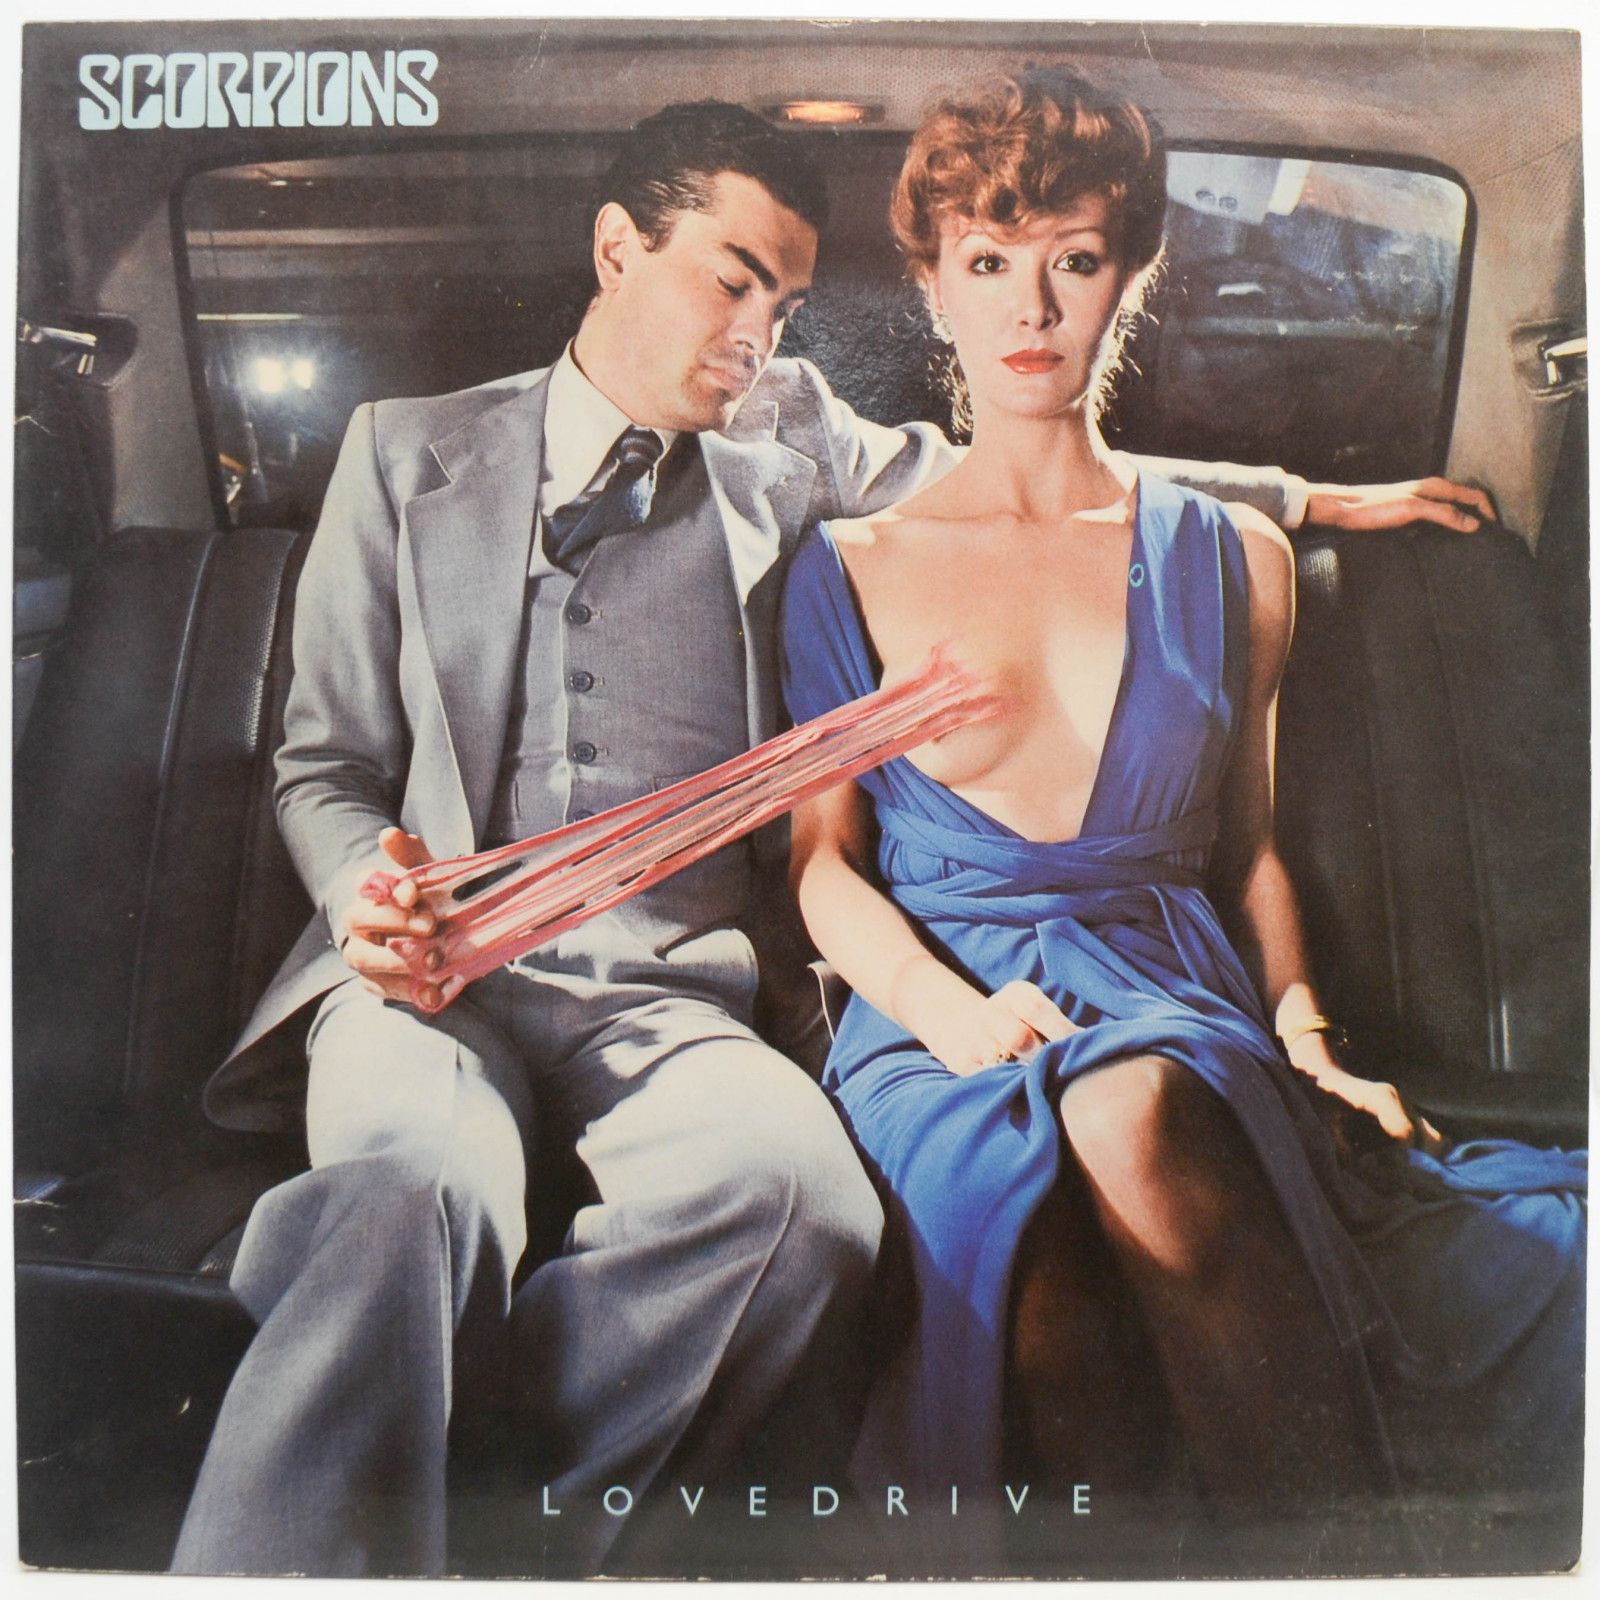 Scorpions — Lovedrive (Germany), 1979